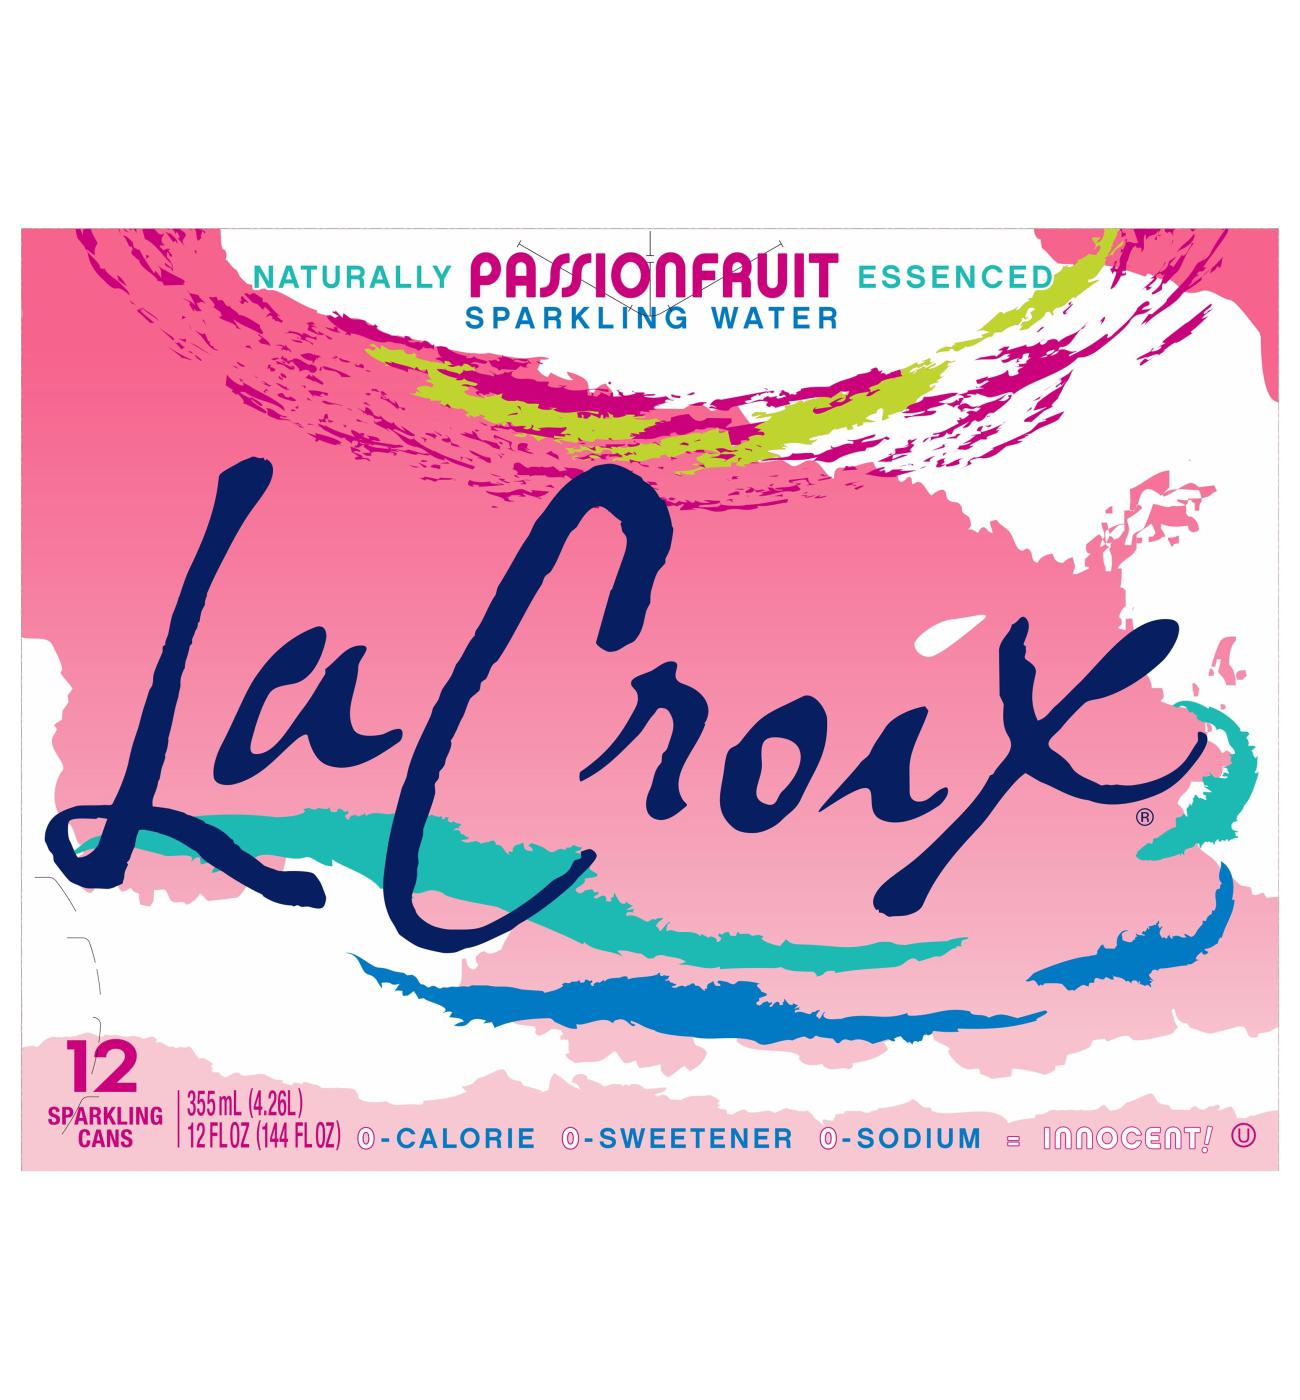 LaCroix Passion Fruit Sparkling Water 12 oz Cans; image 2 of 2